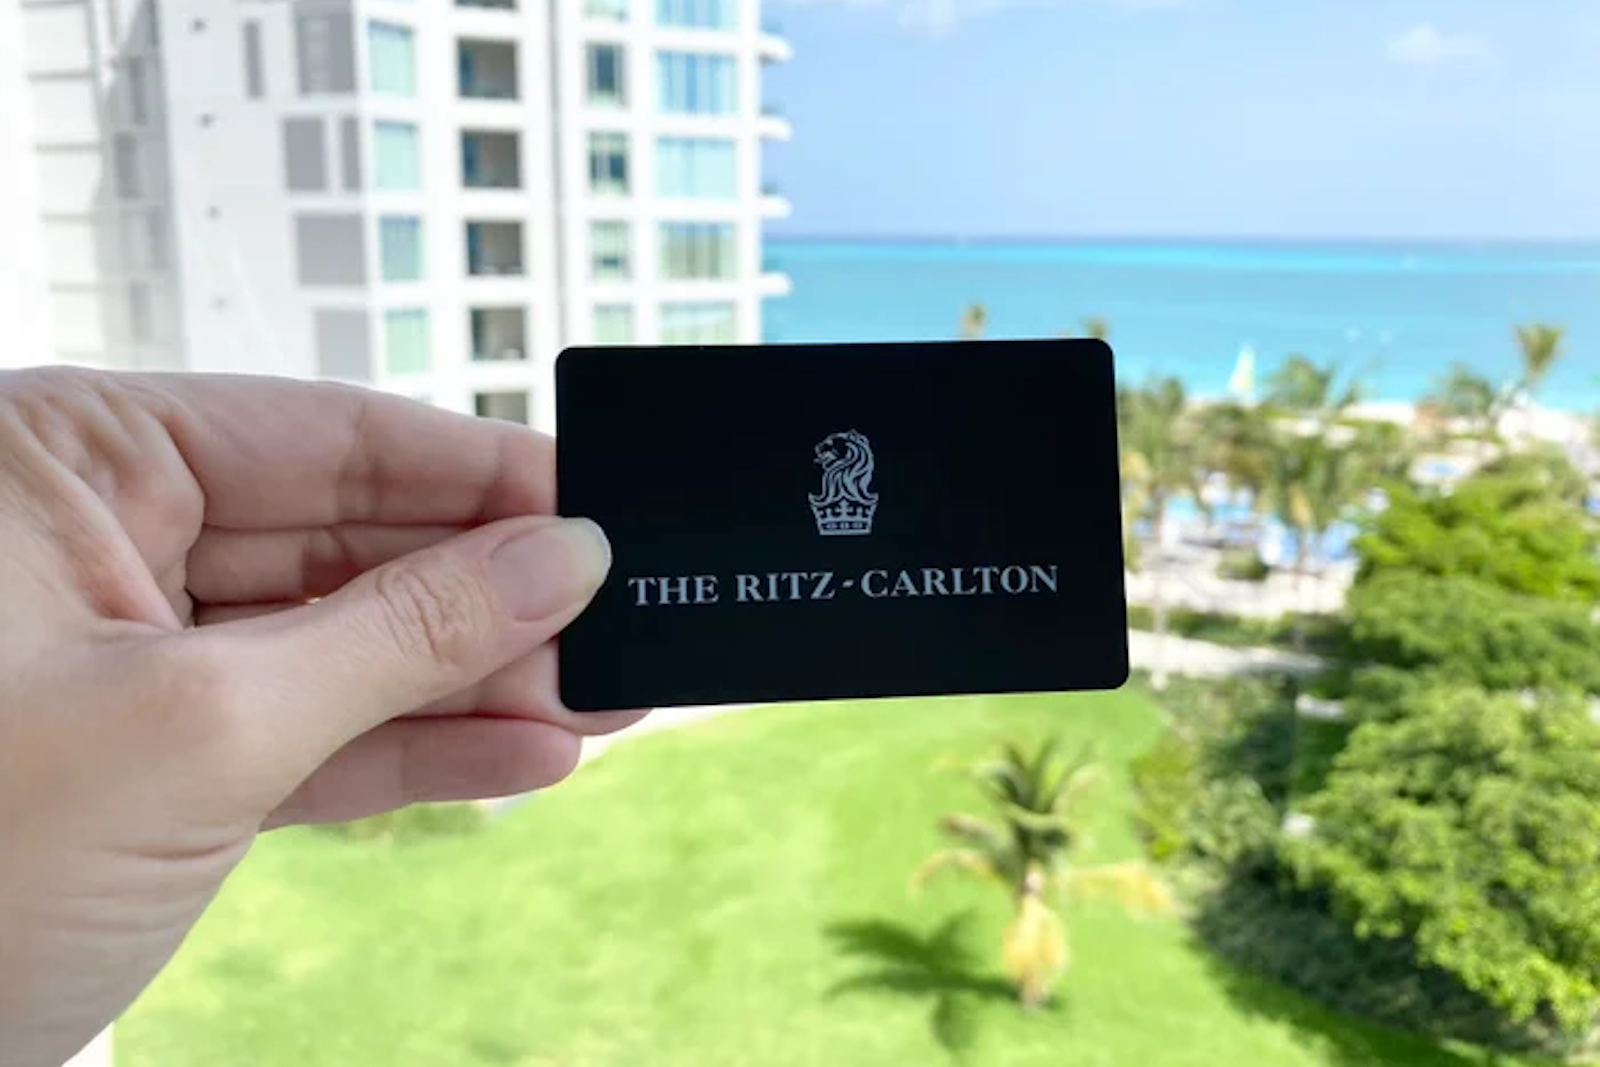 Ritz-Carlton room key